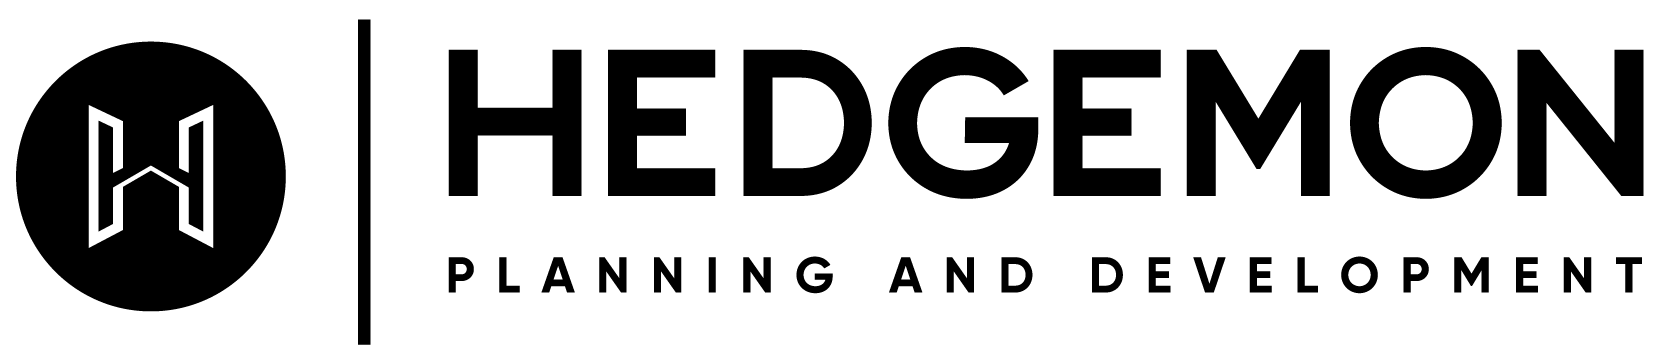 Hedgemon PD Logo